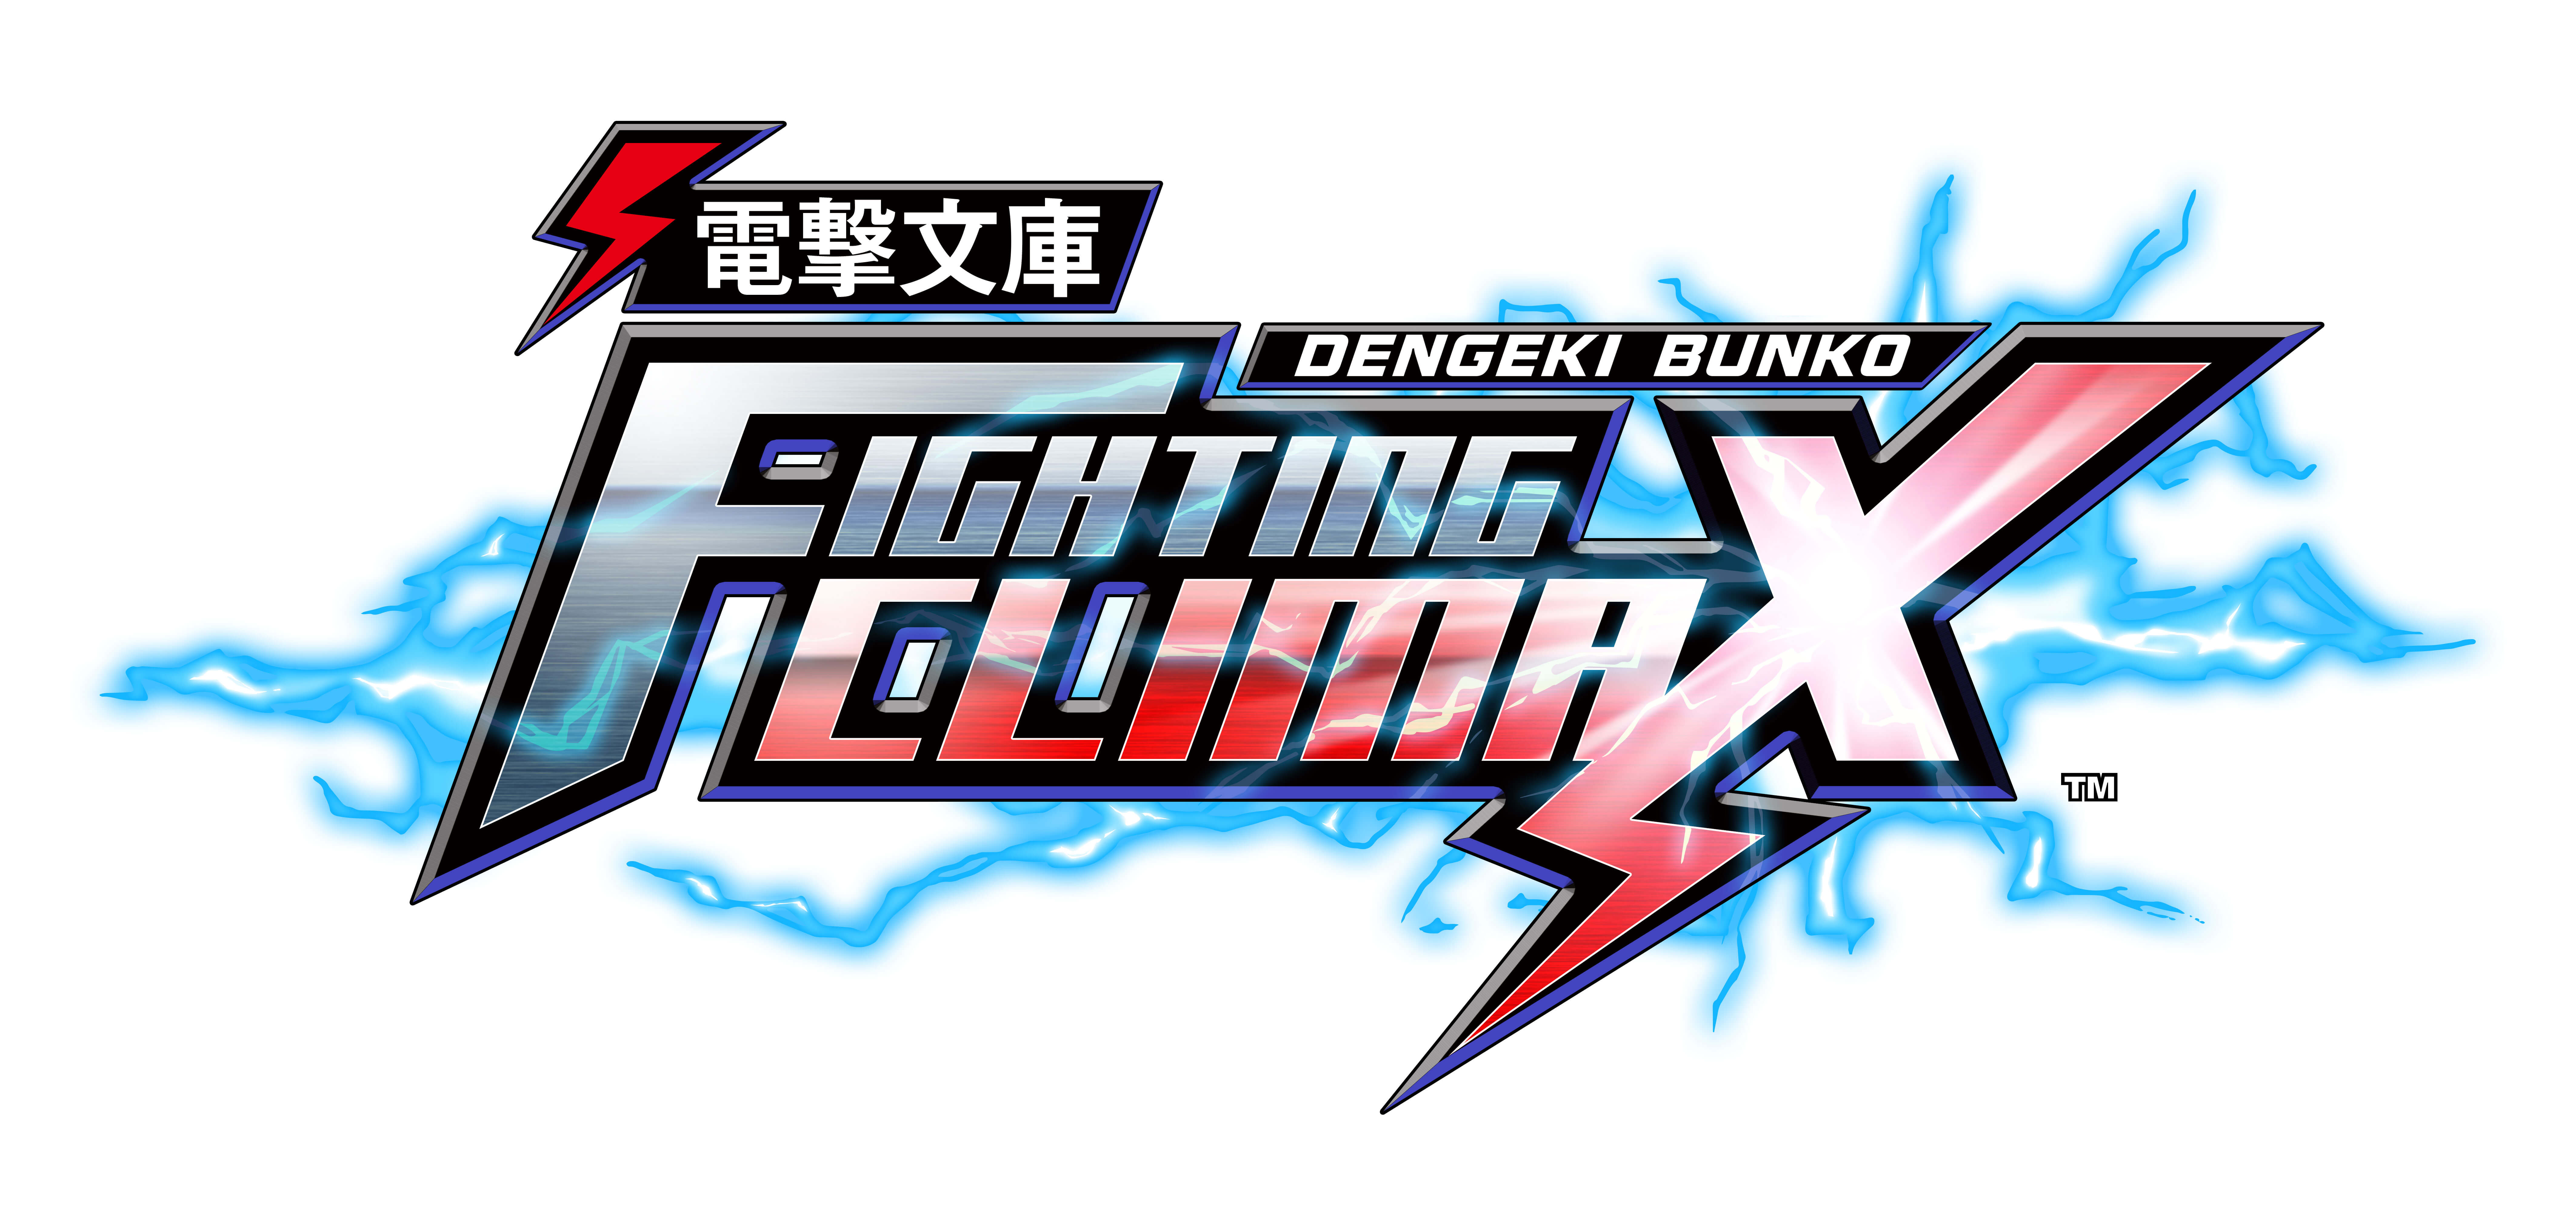 dengeki bunko fighting climax ignition roster